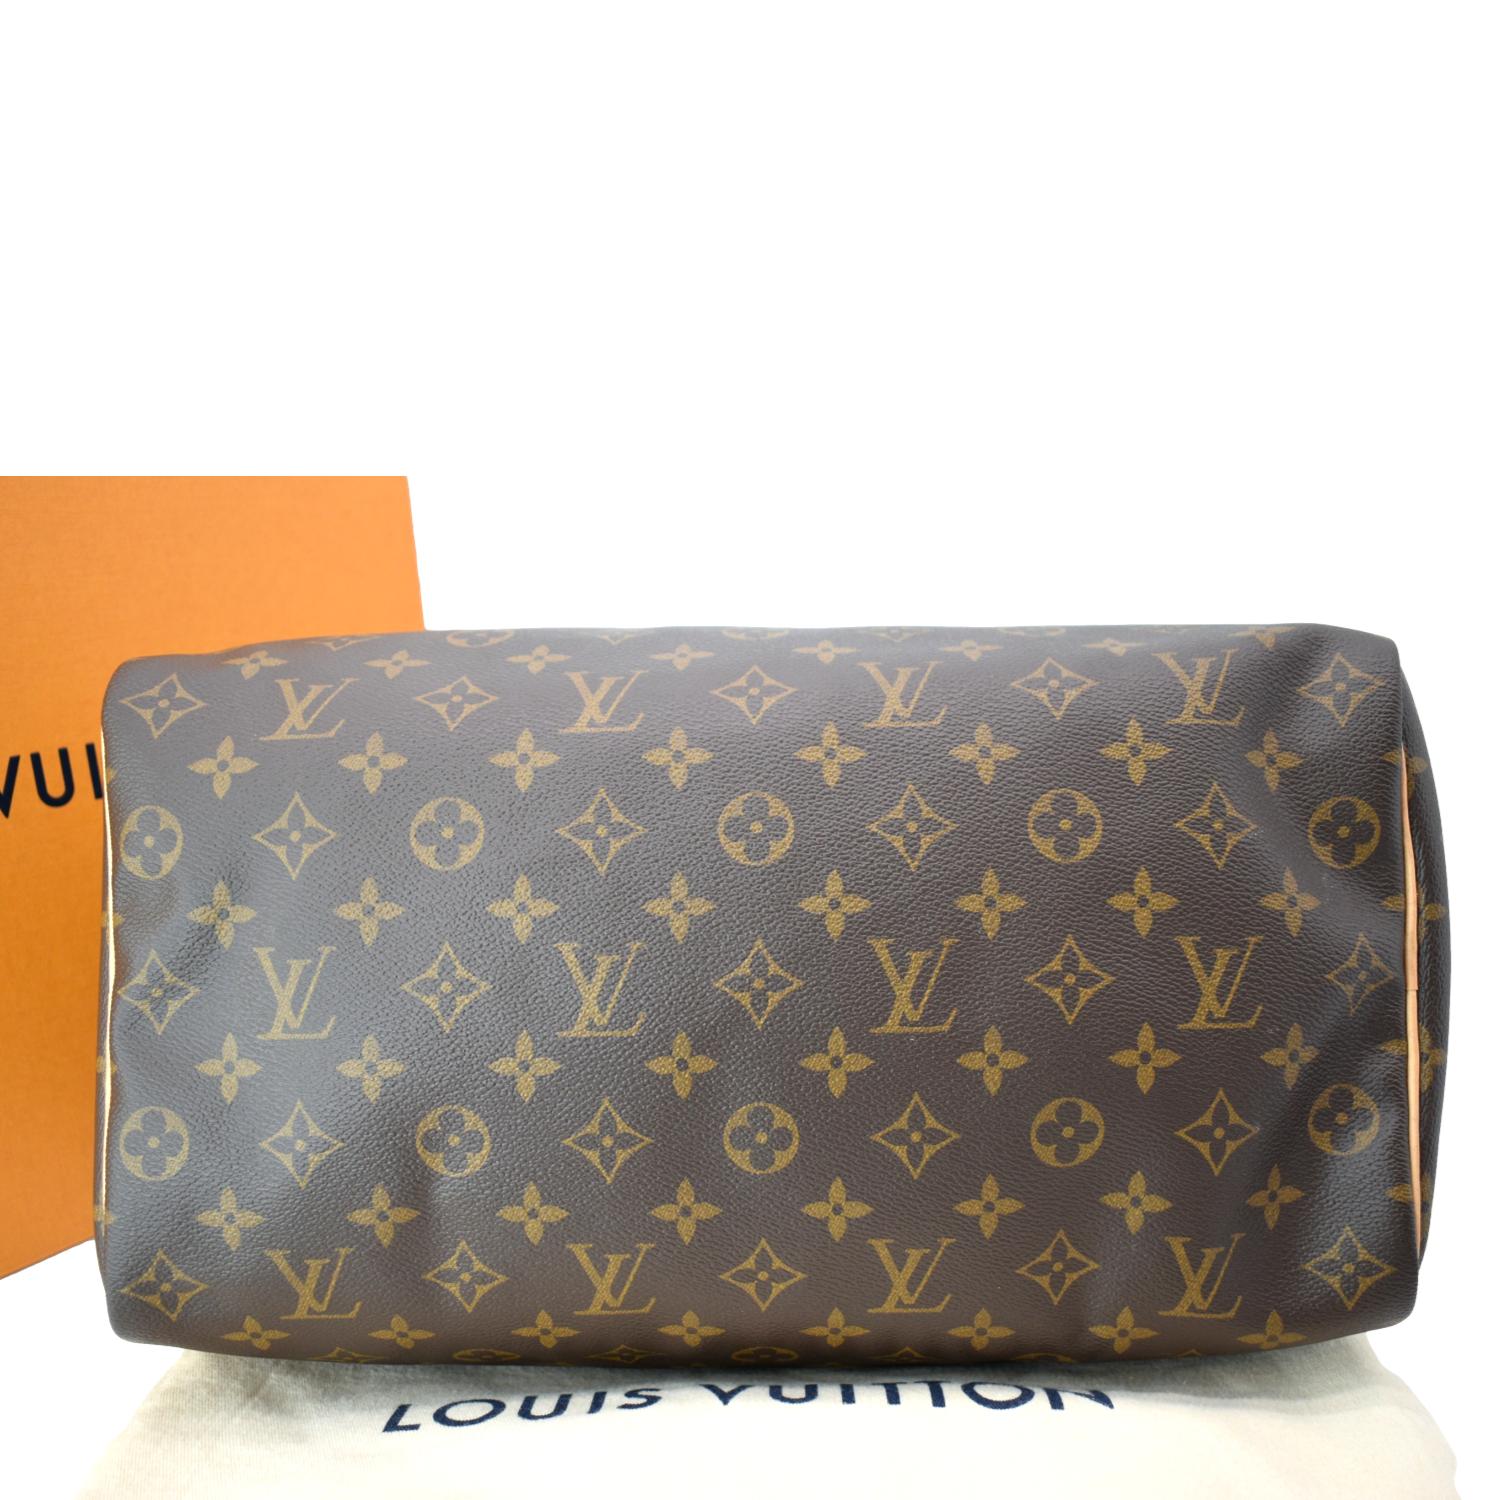 SALE)Louis Vuitton Speedy 35 Monogram Bag Brown